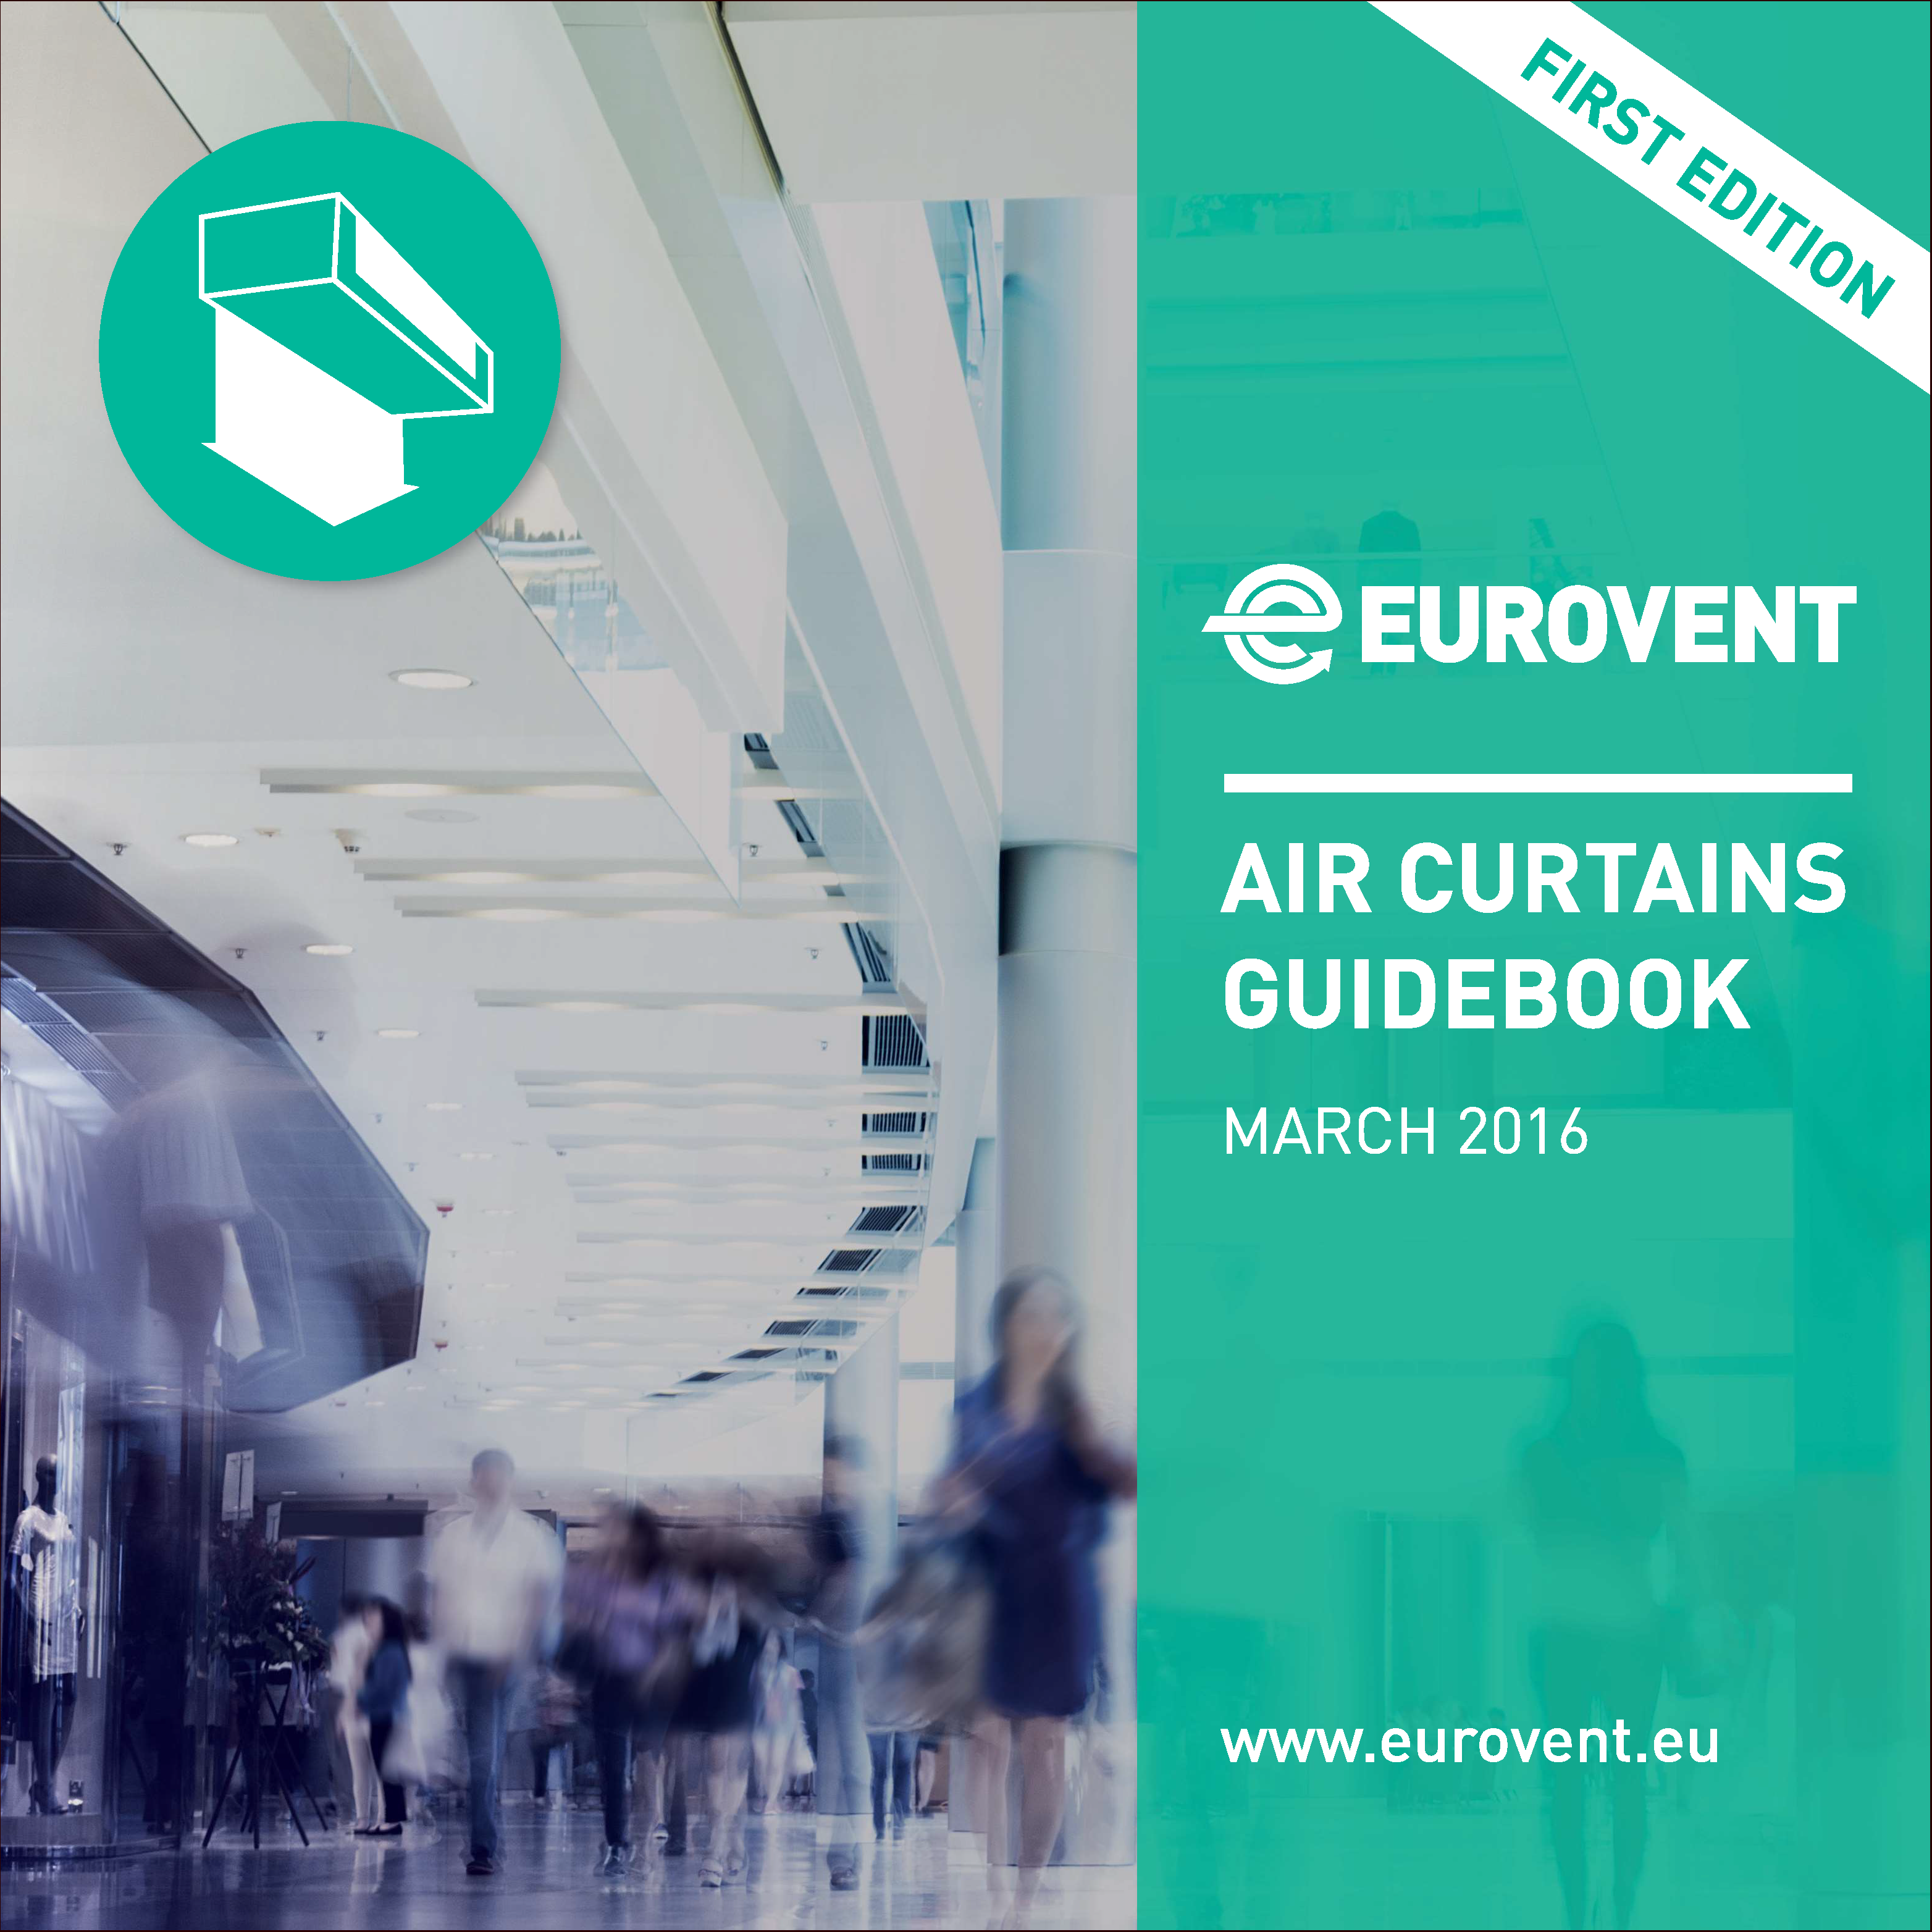 Eurovent Air Curtains Guidebook - First edition